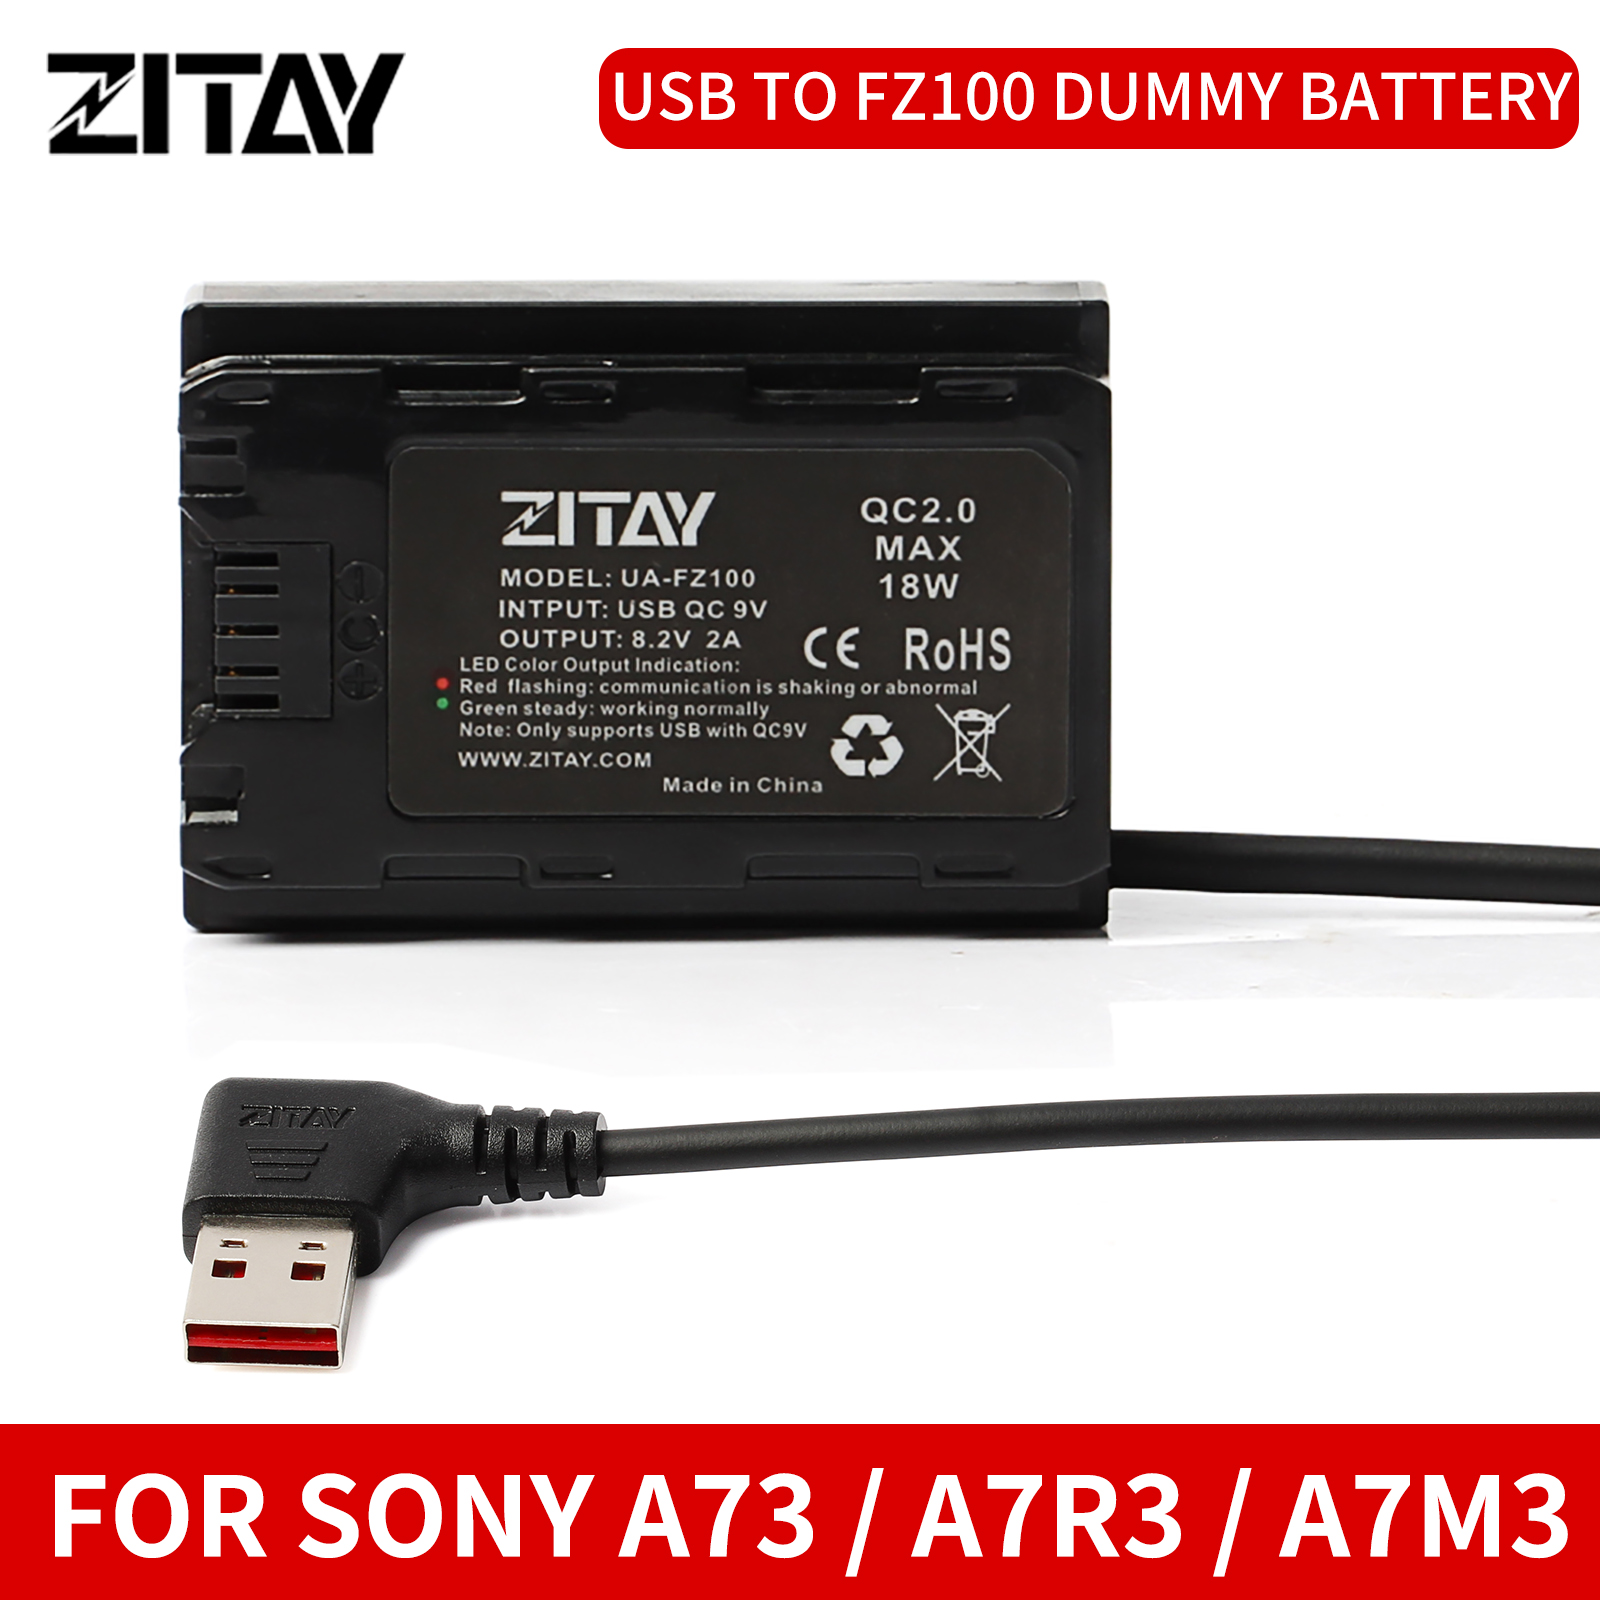 Sony A7rii Reviewsony A7riii/a7iii/a9 Dummy Battery For Feelworld  F5/ma5/f6 Monitors